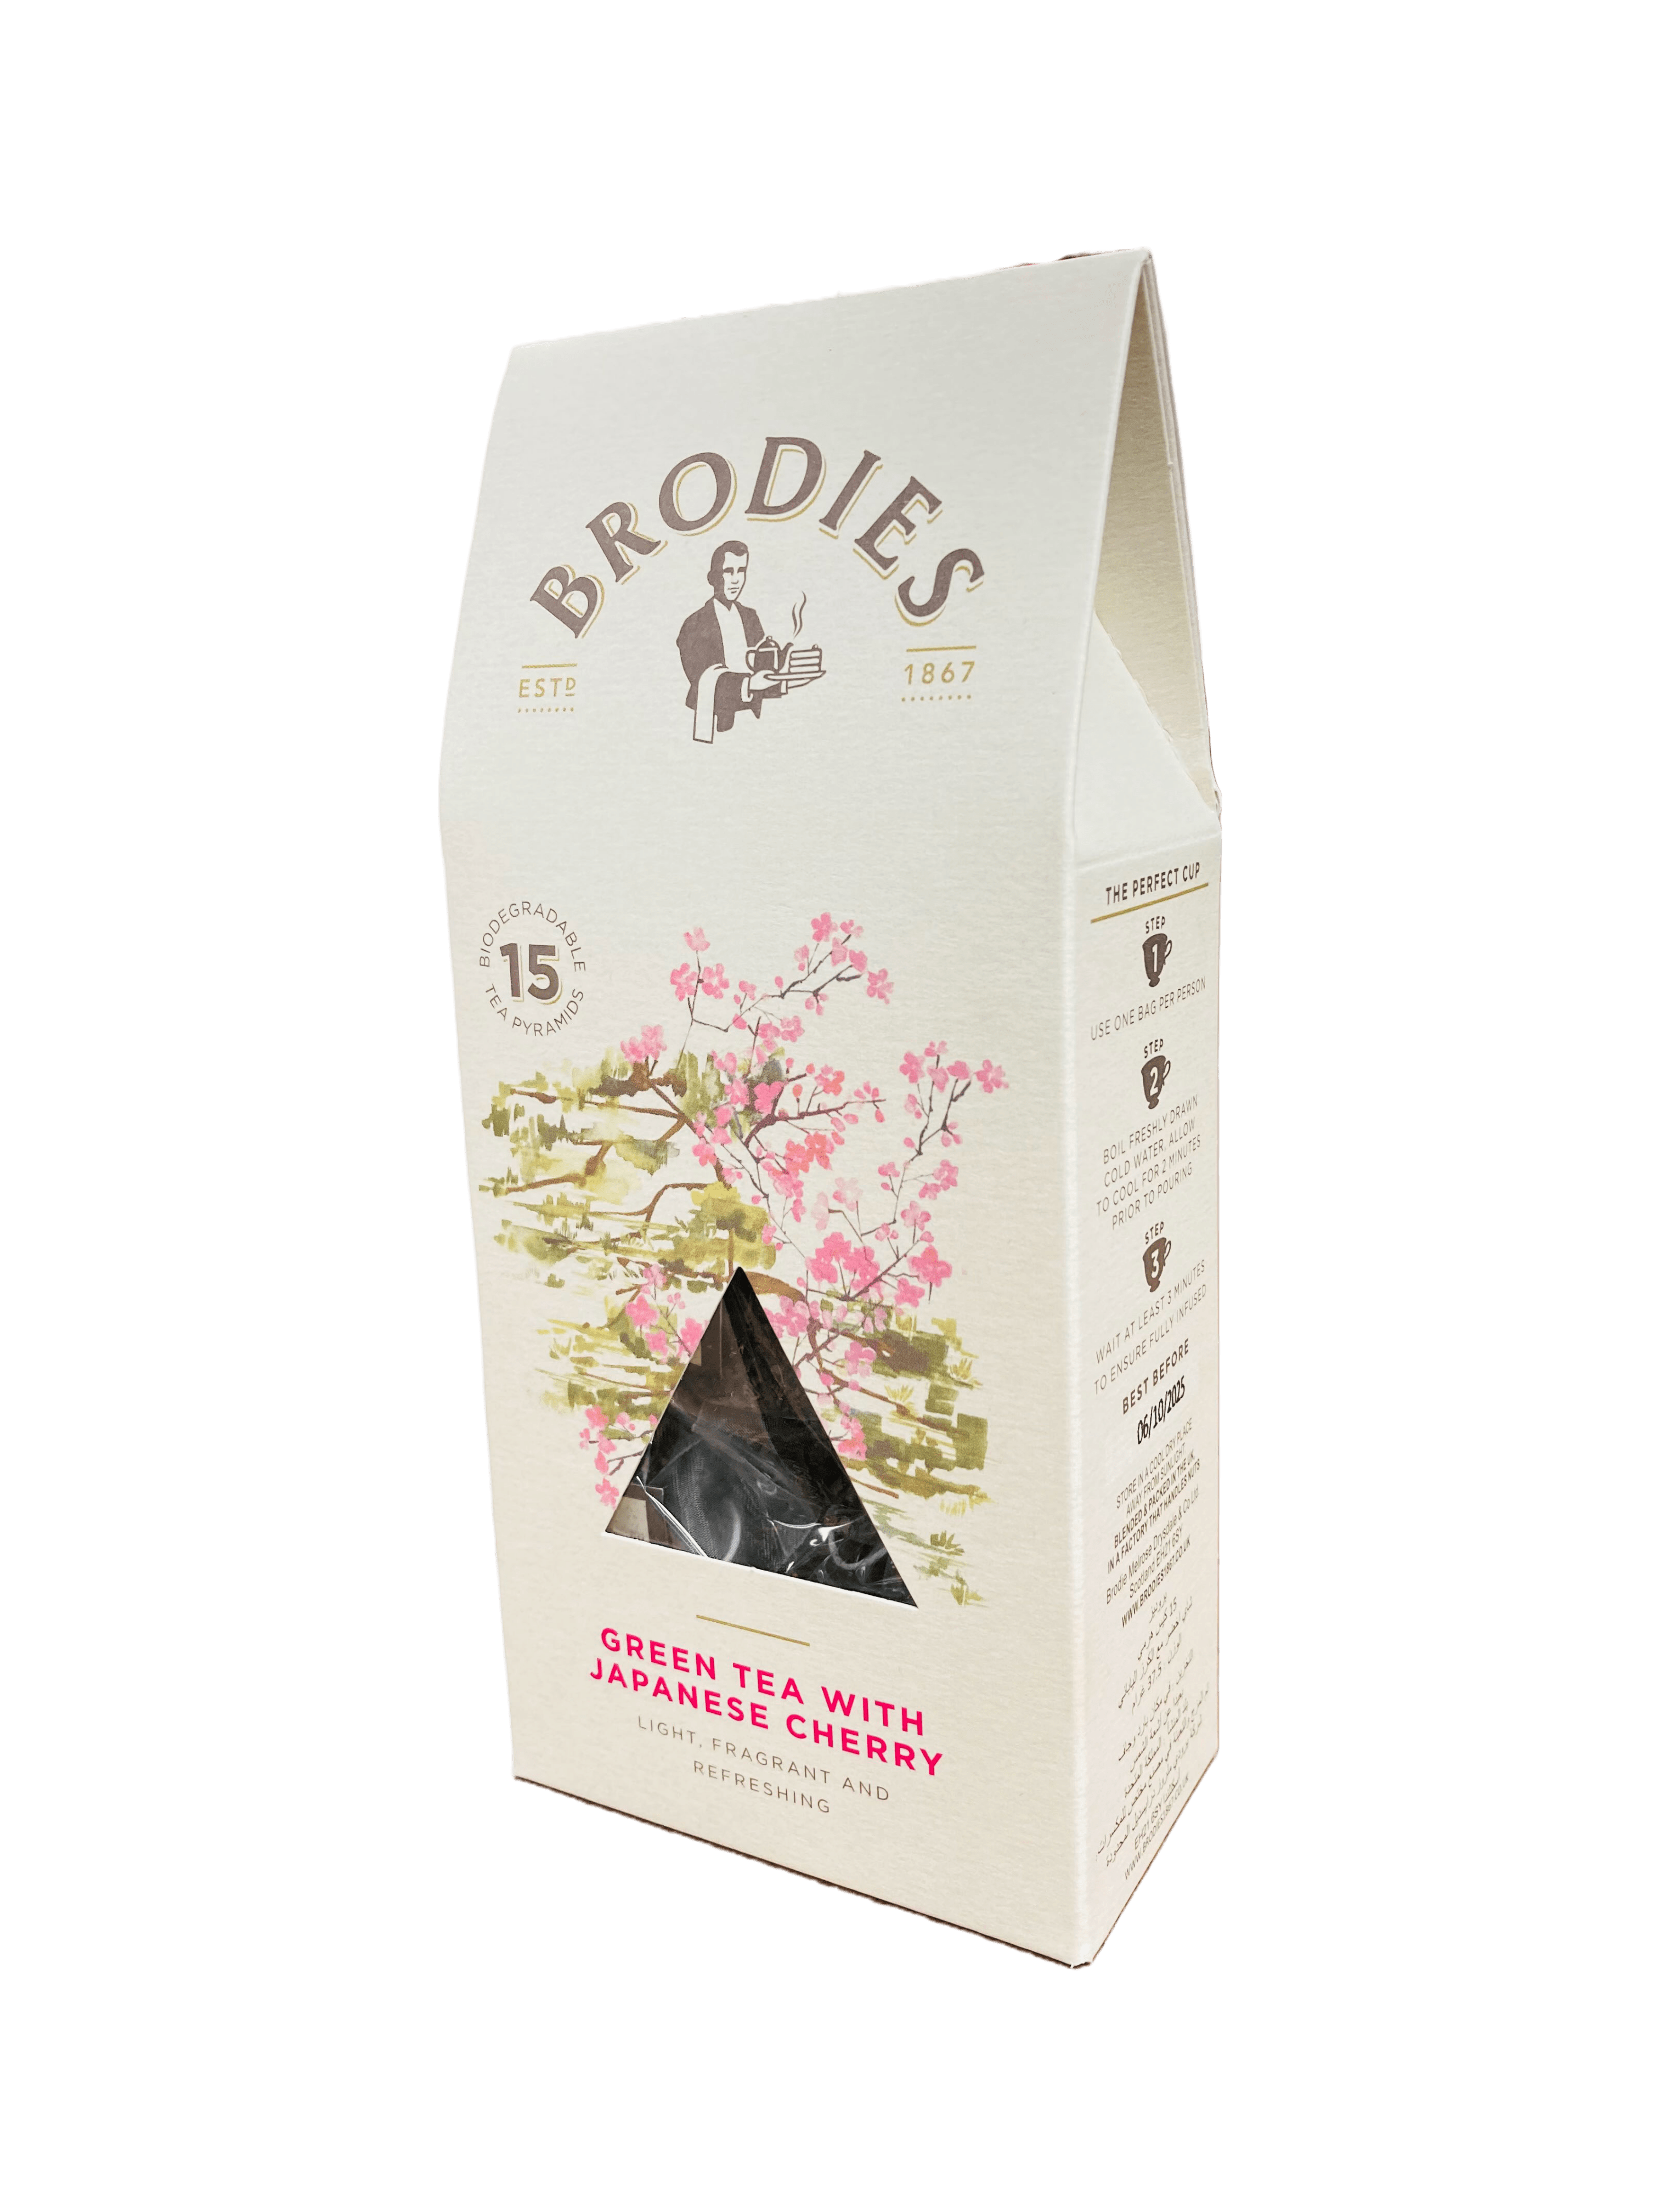 BRODIES - Green Tea With Japanese Cherry Pyramid Tea Bag